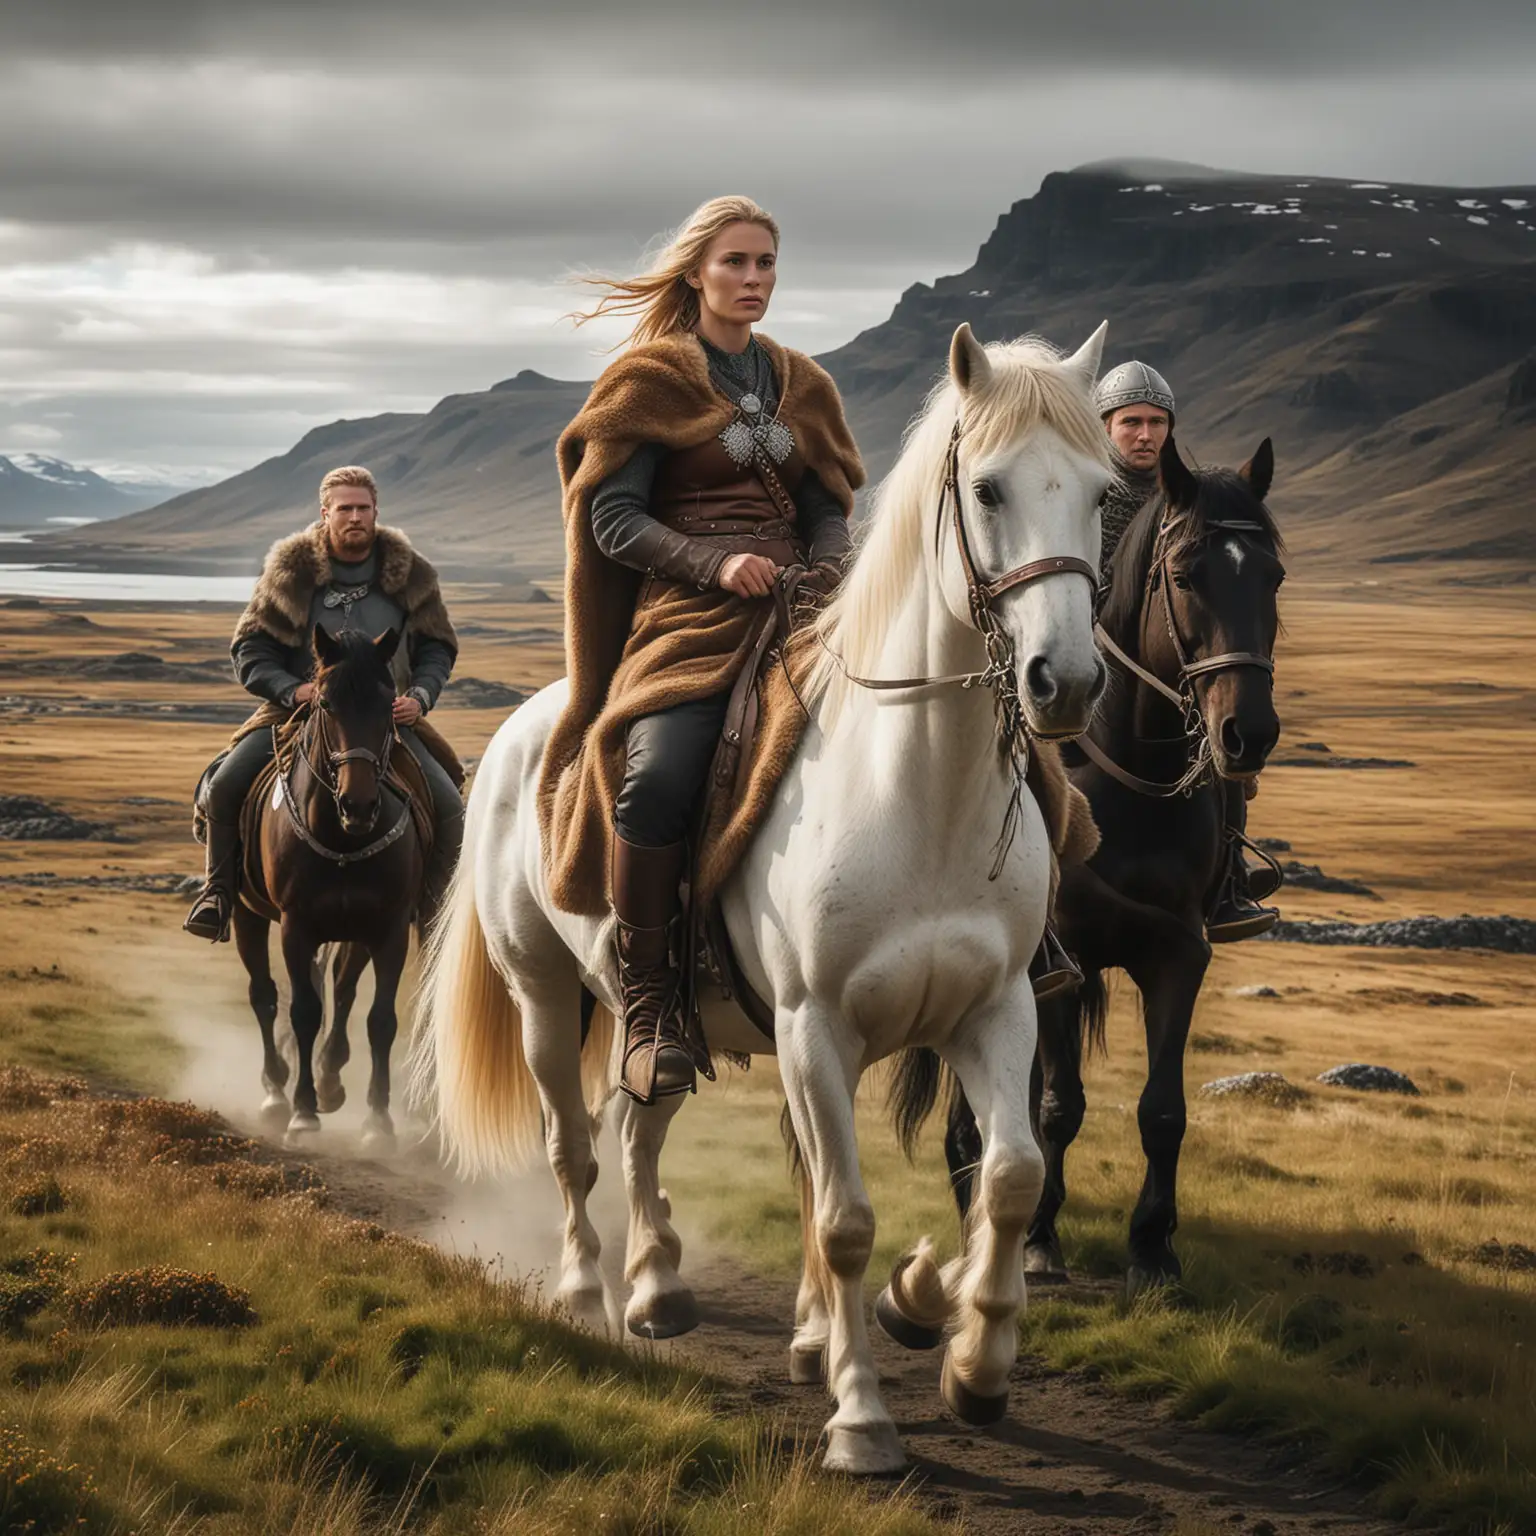 Viking Woman Leading Warriors on Horseback through Icelandic Landscape